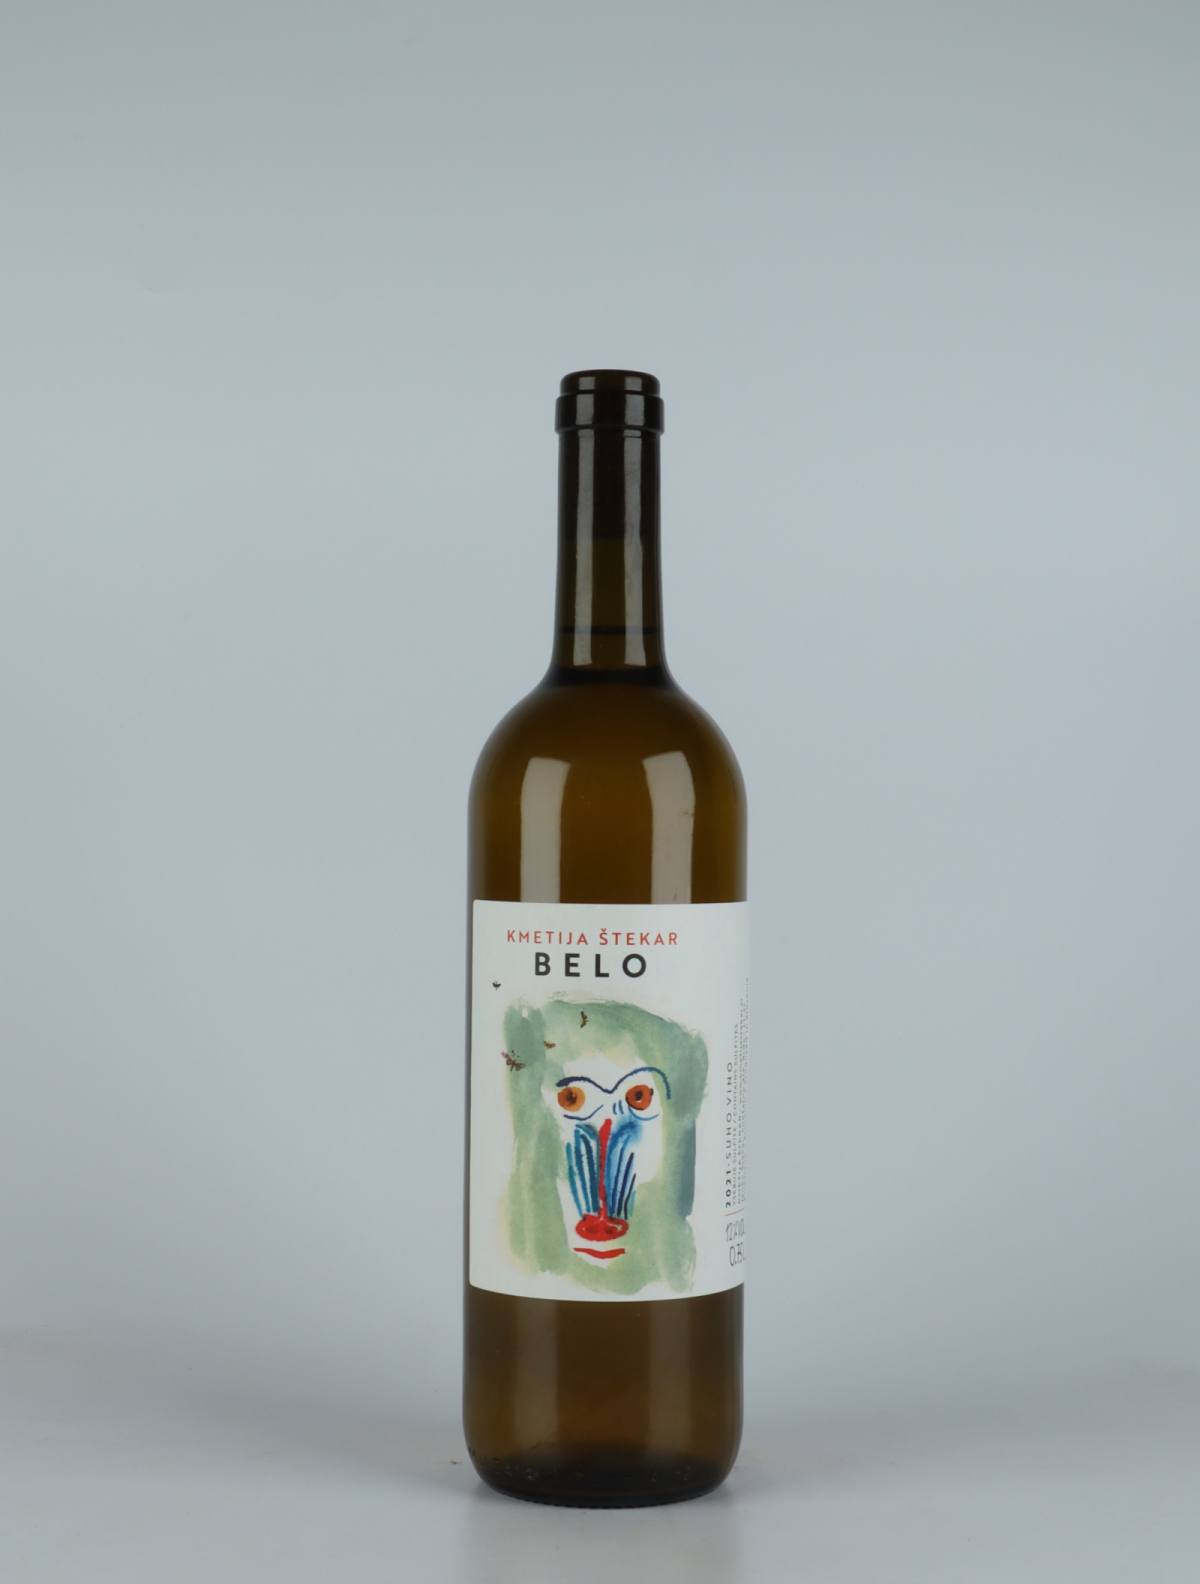 En flaske 2021 Belo Hvidvin fra Kmetija Stekar, Brda i Slovenien